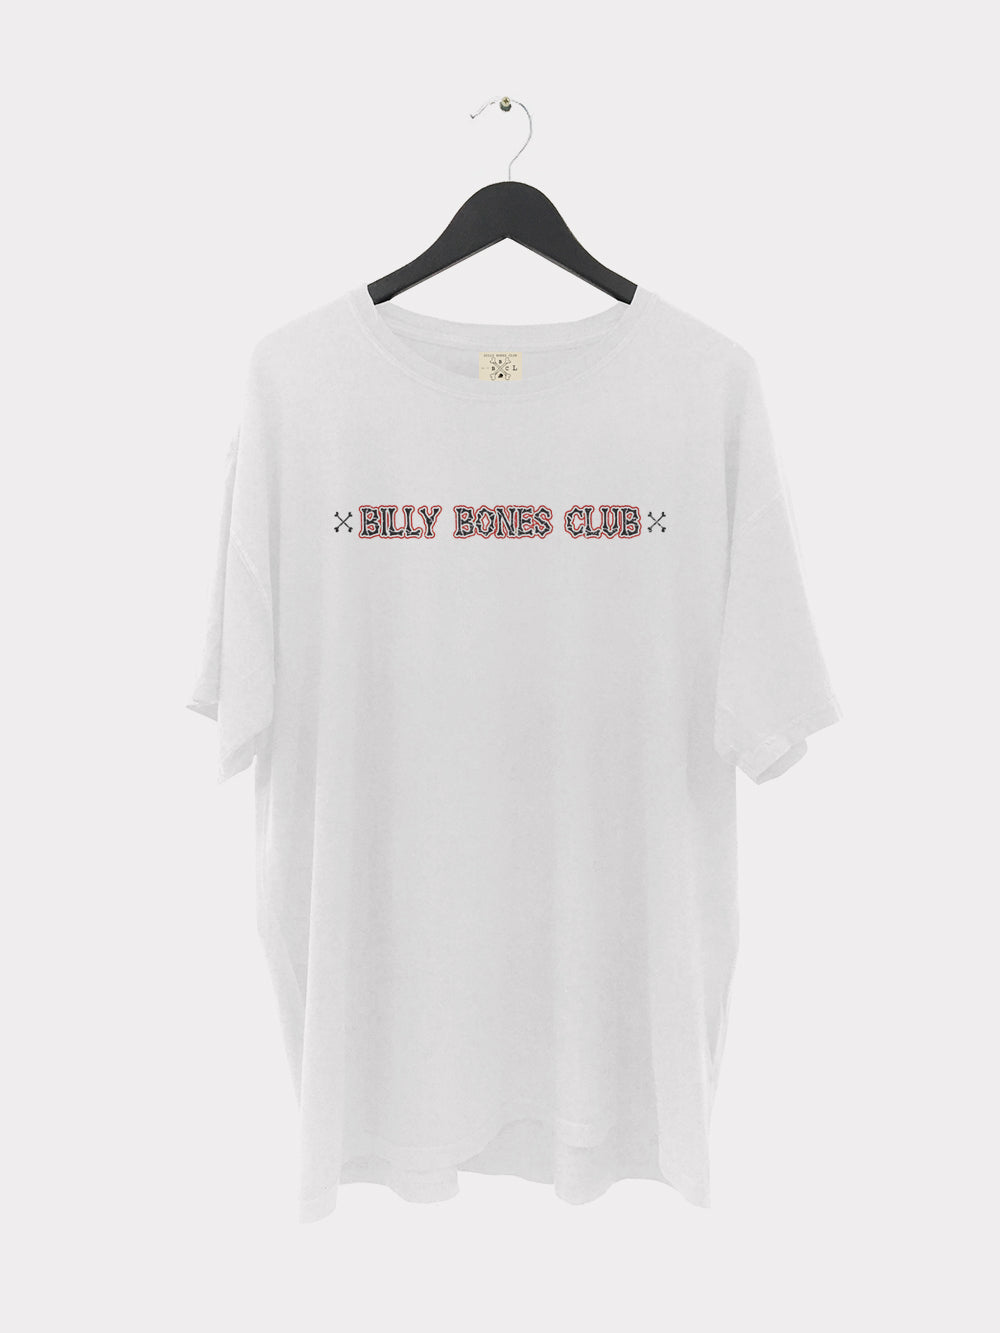 Billy Bones Club X Tee - Vintage Black Tシャツ ホワイト レディース 